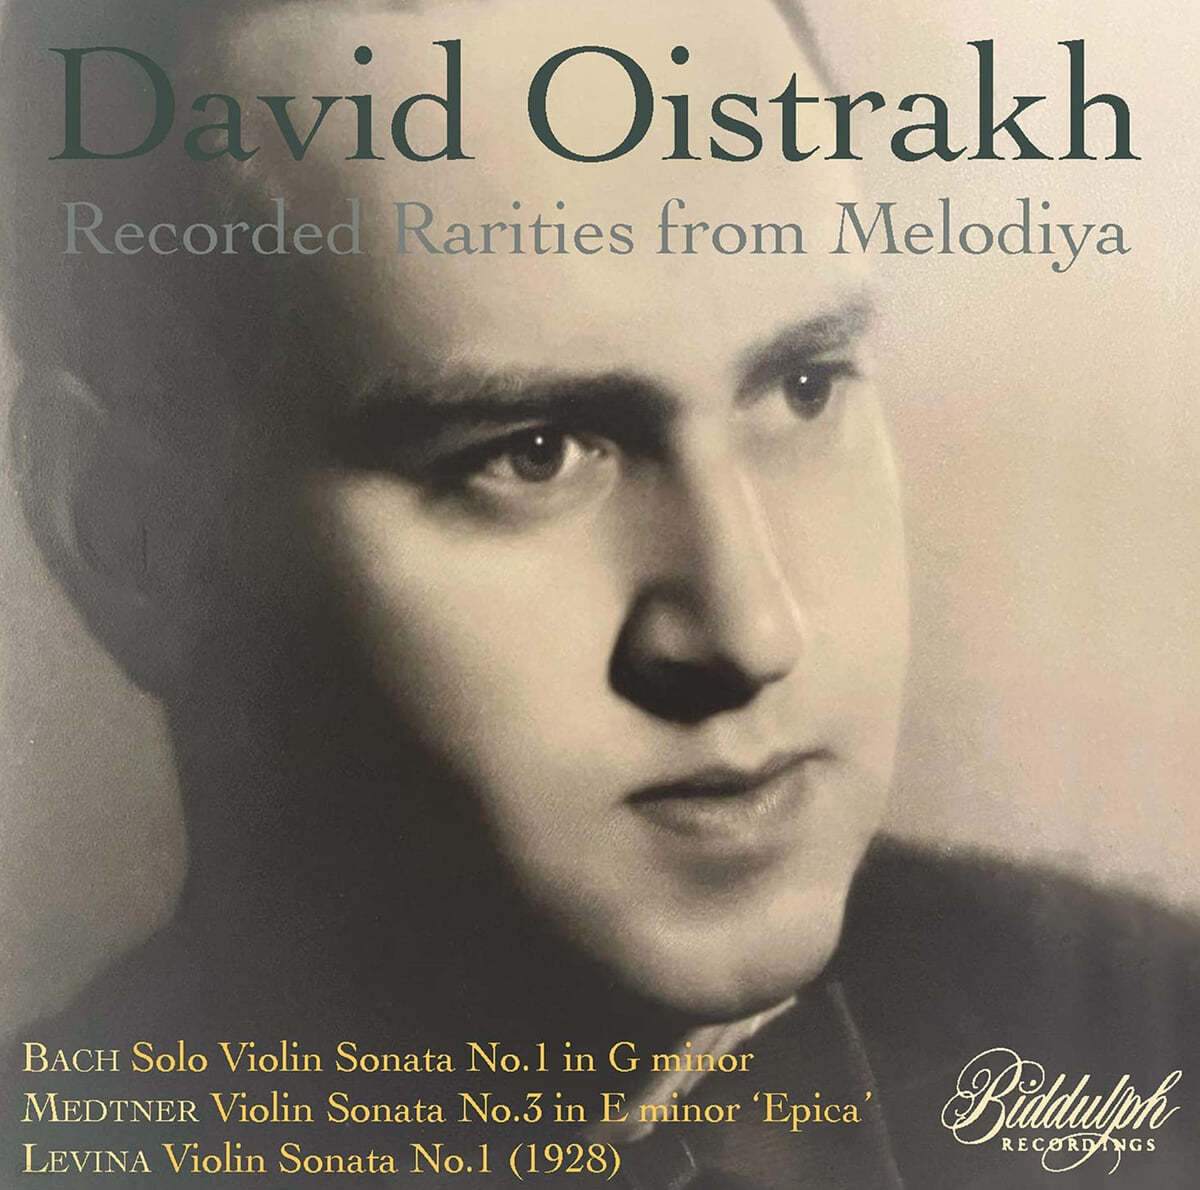 David Oistrach 다비트 오이스트라흐 - 멜로디야 녹음집 (Recorded Rarities from Melodiya) 